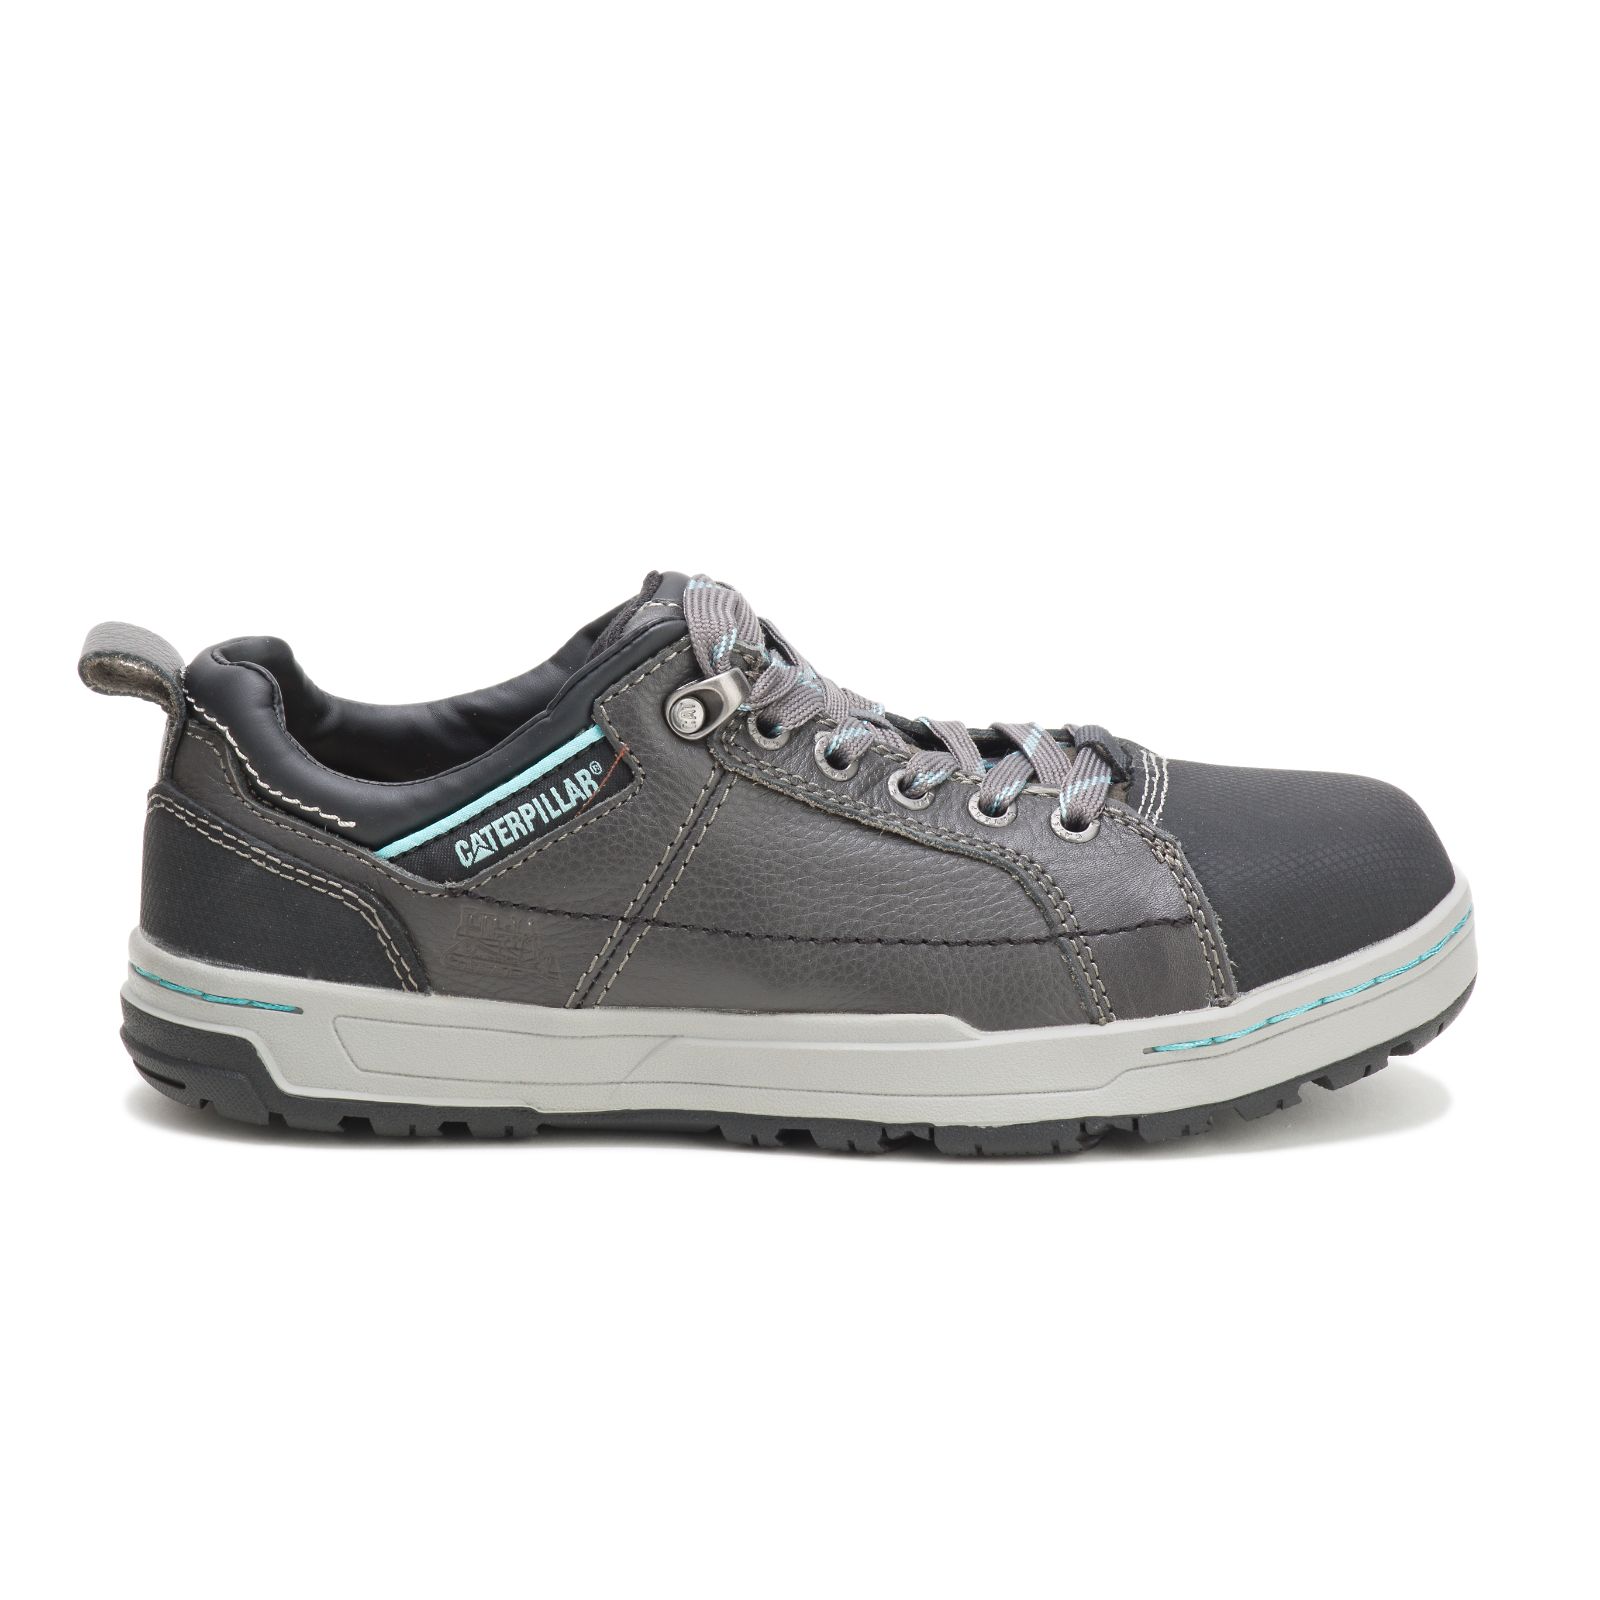 Caterpillar Steel Toe Shoes Online UAE - Caterpillar Brode Steel Toe Womens - Dark Grey/Mint WRNDCE871